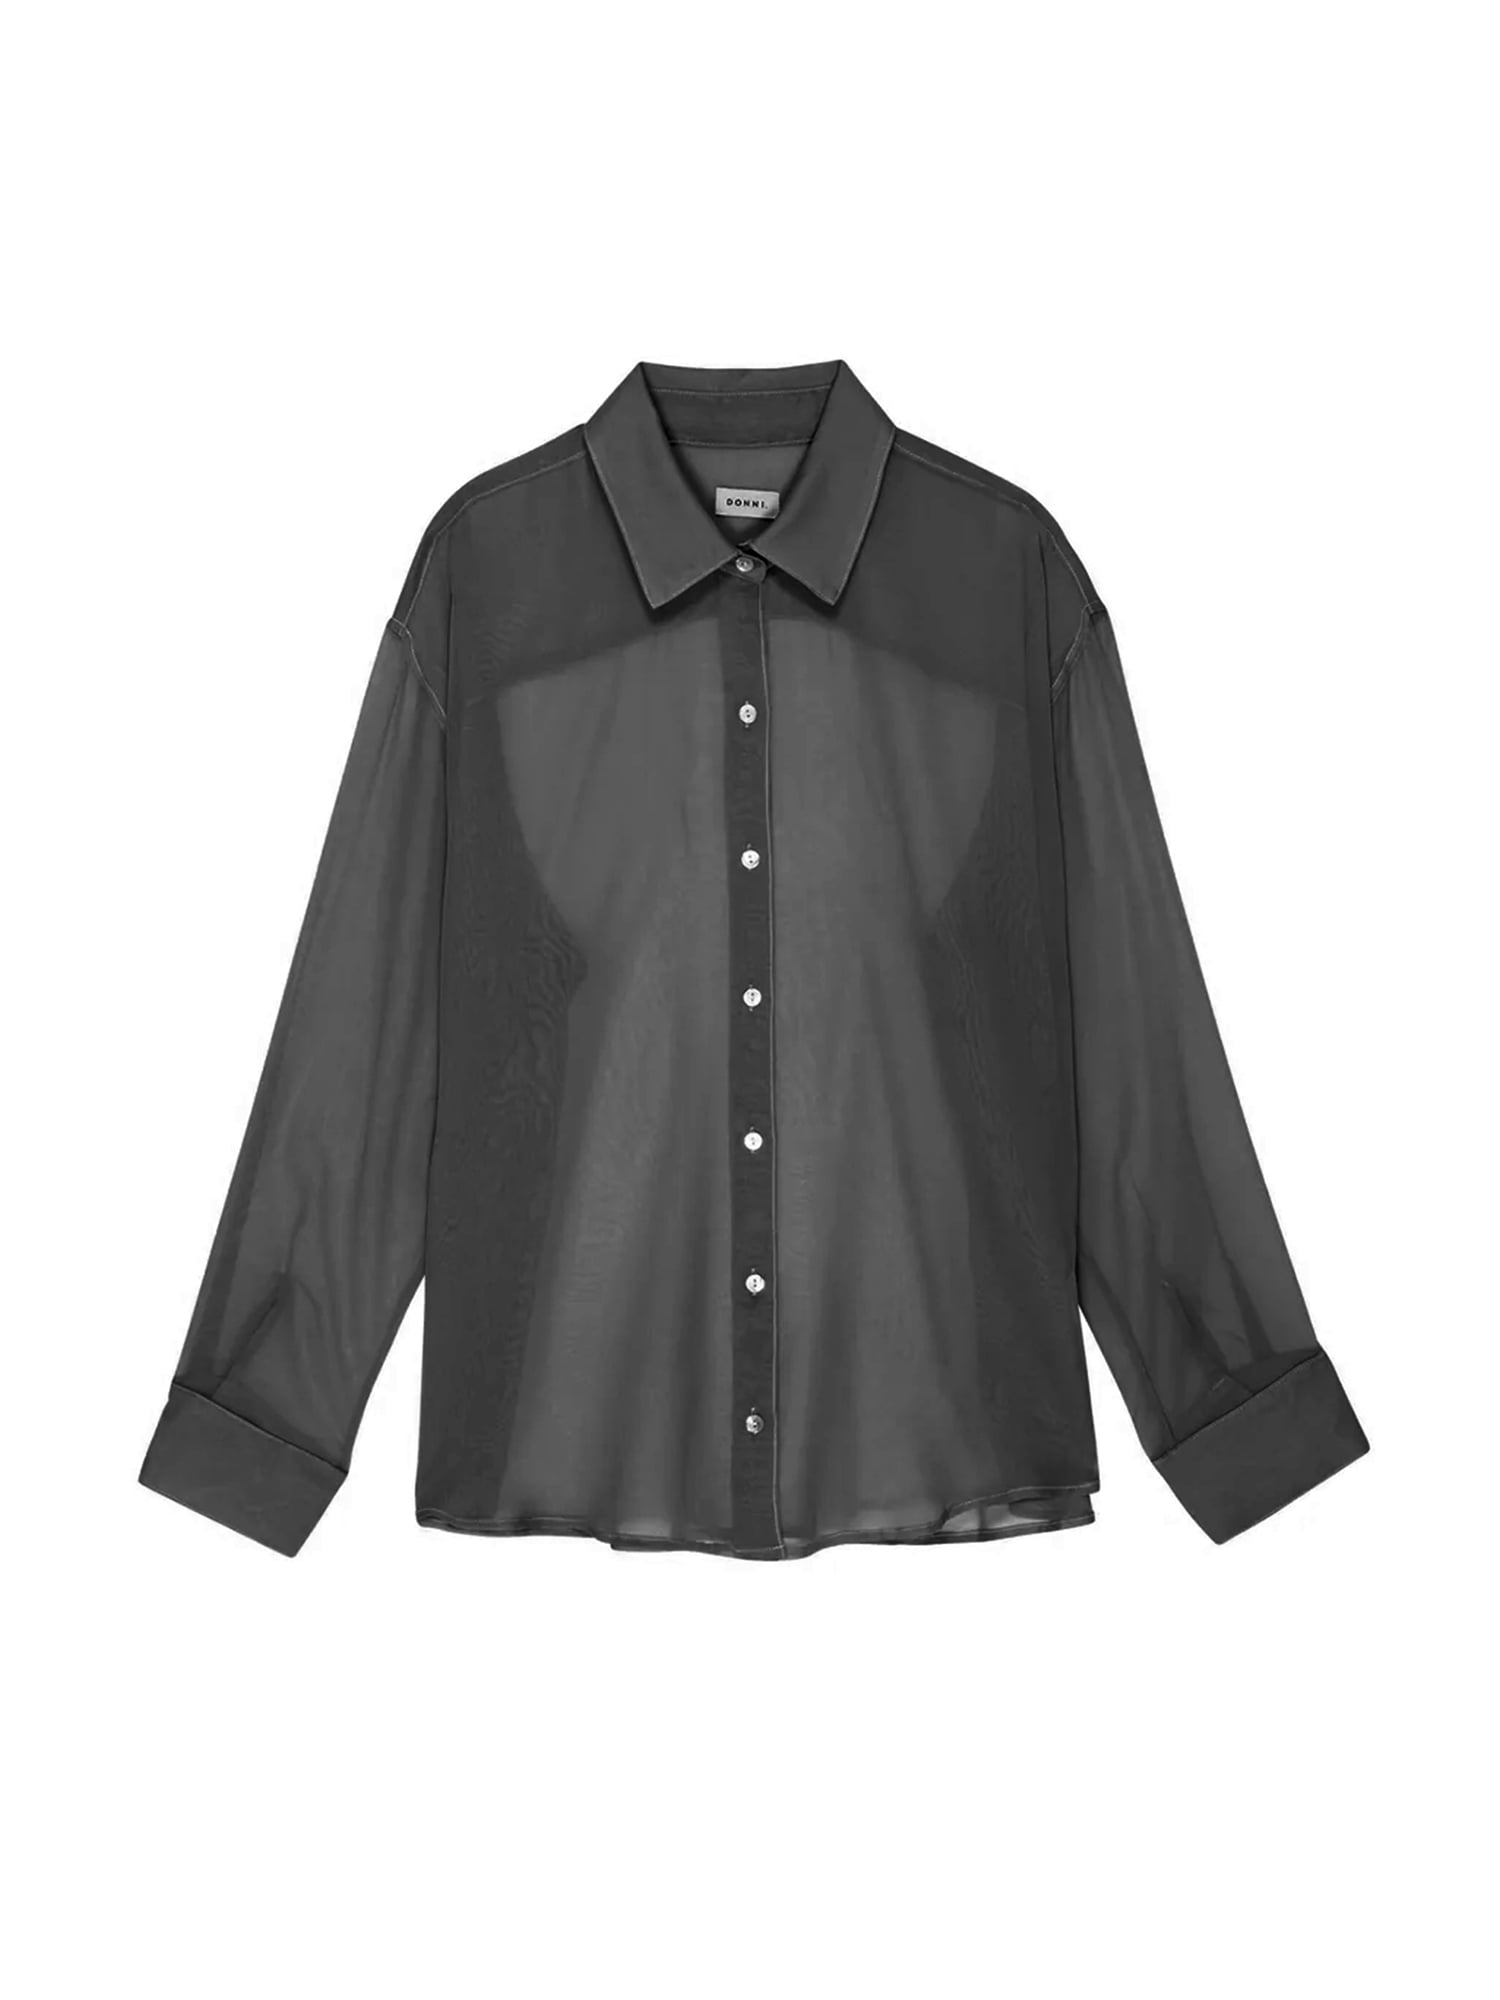 wybzd Women Sheer Mesh See Through Lapel Button Down Shirt Long Sleeve  Spring Autumn Blouse Tops Black XL 